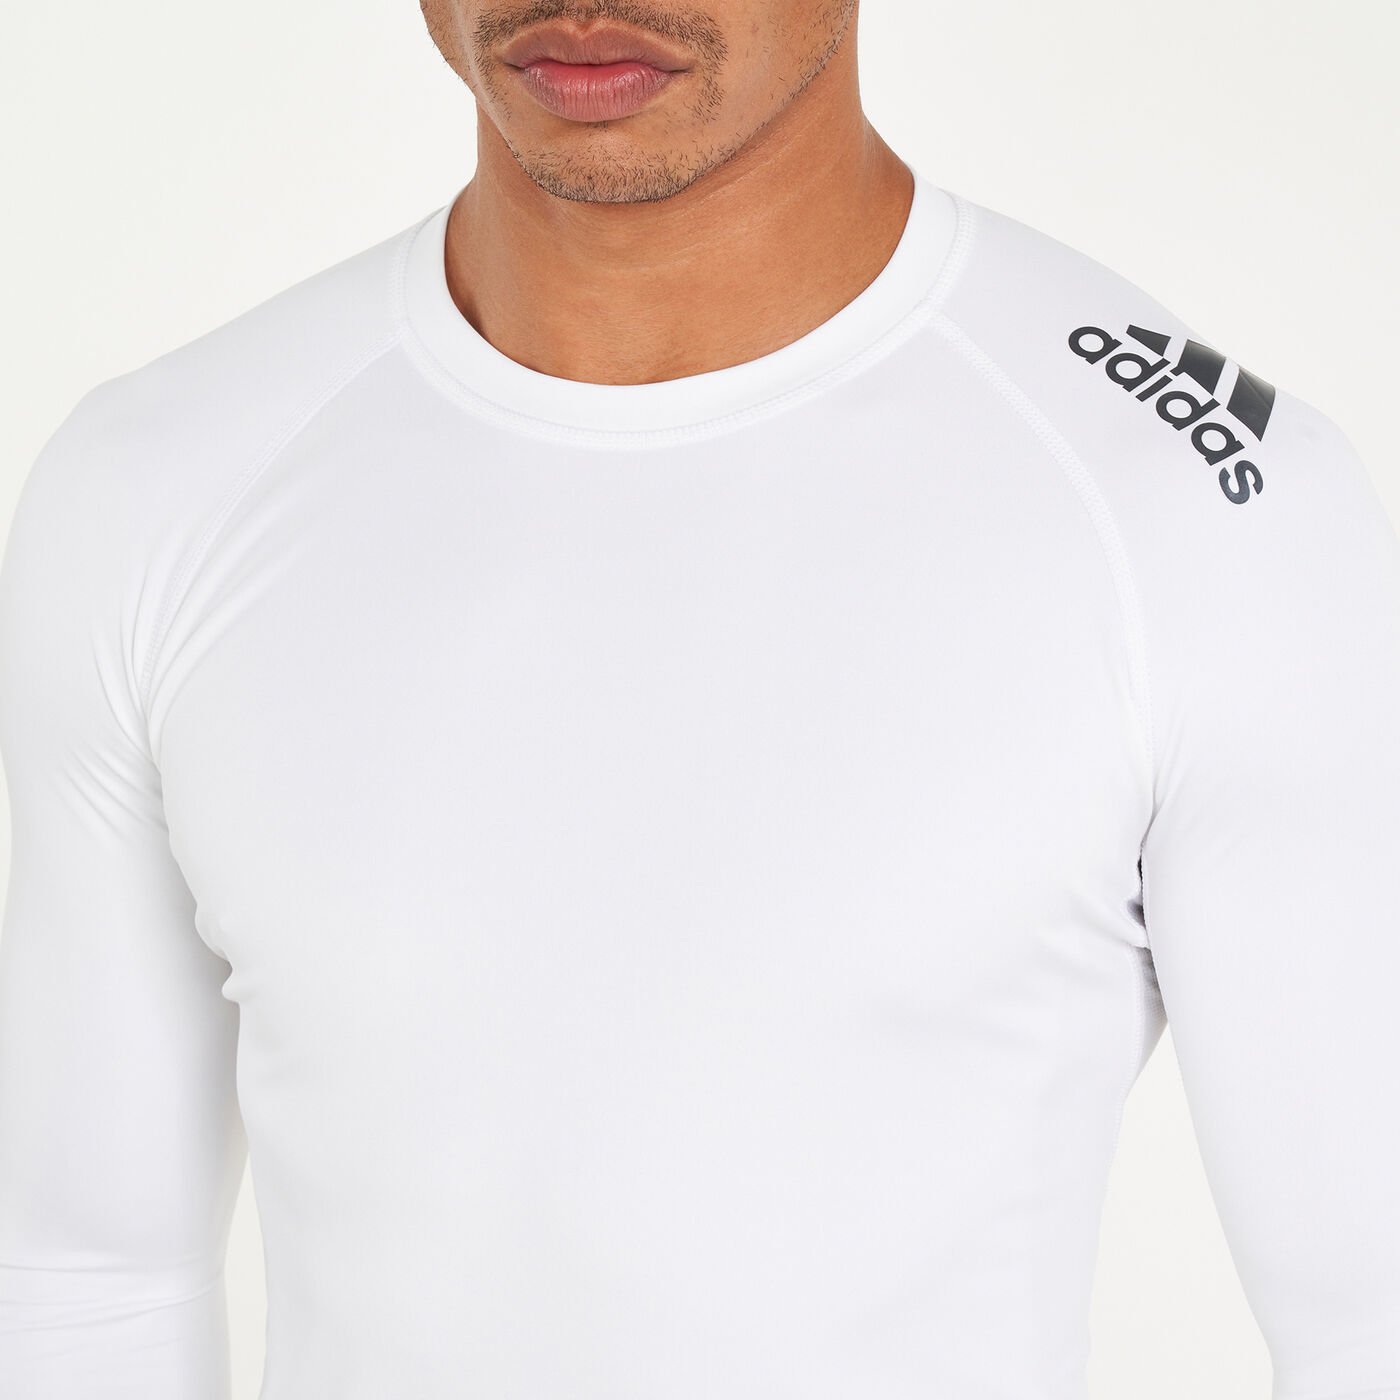 Men's Alphaskin Sport Long Sleeves T-Shirt